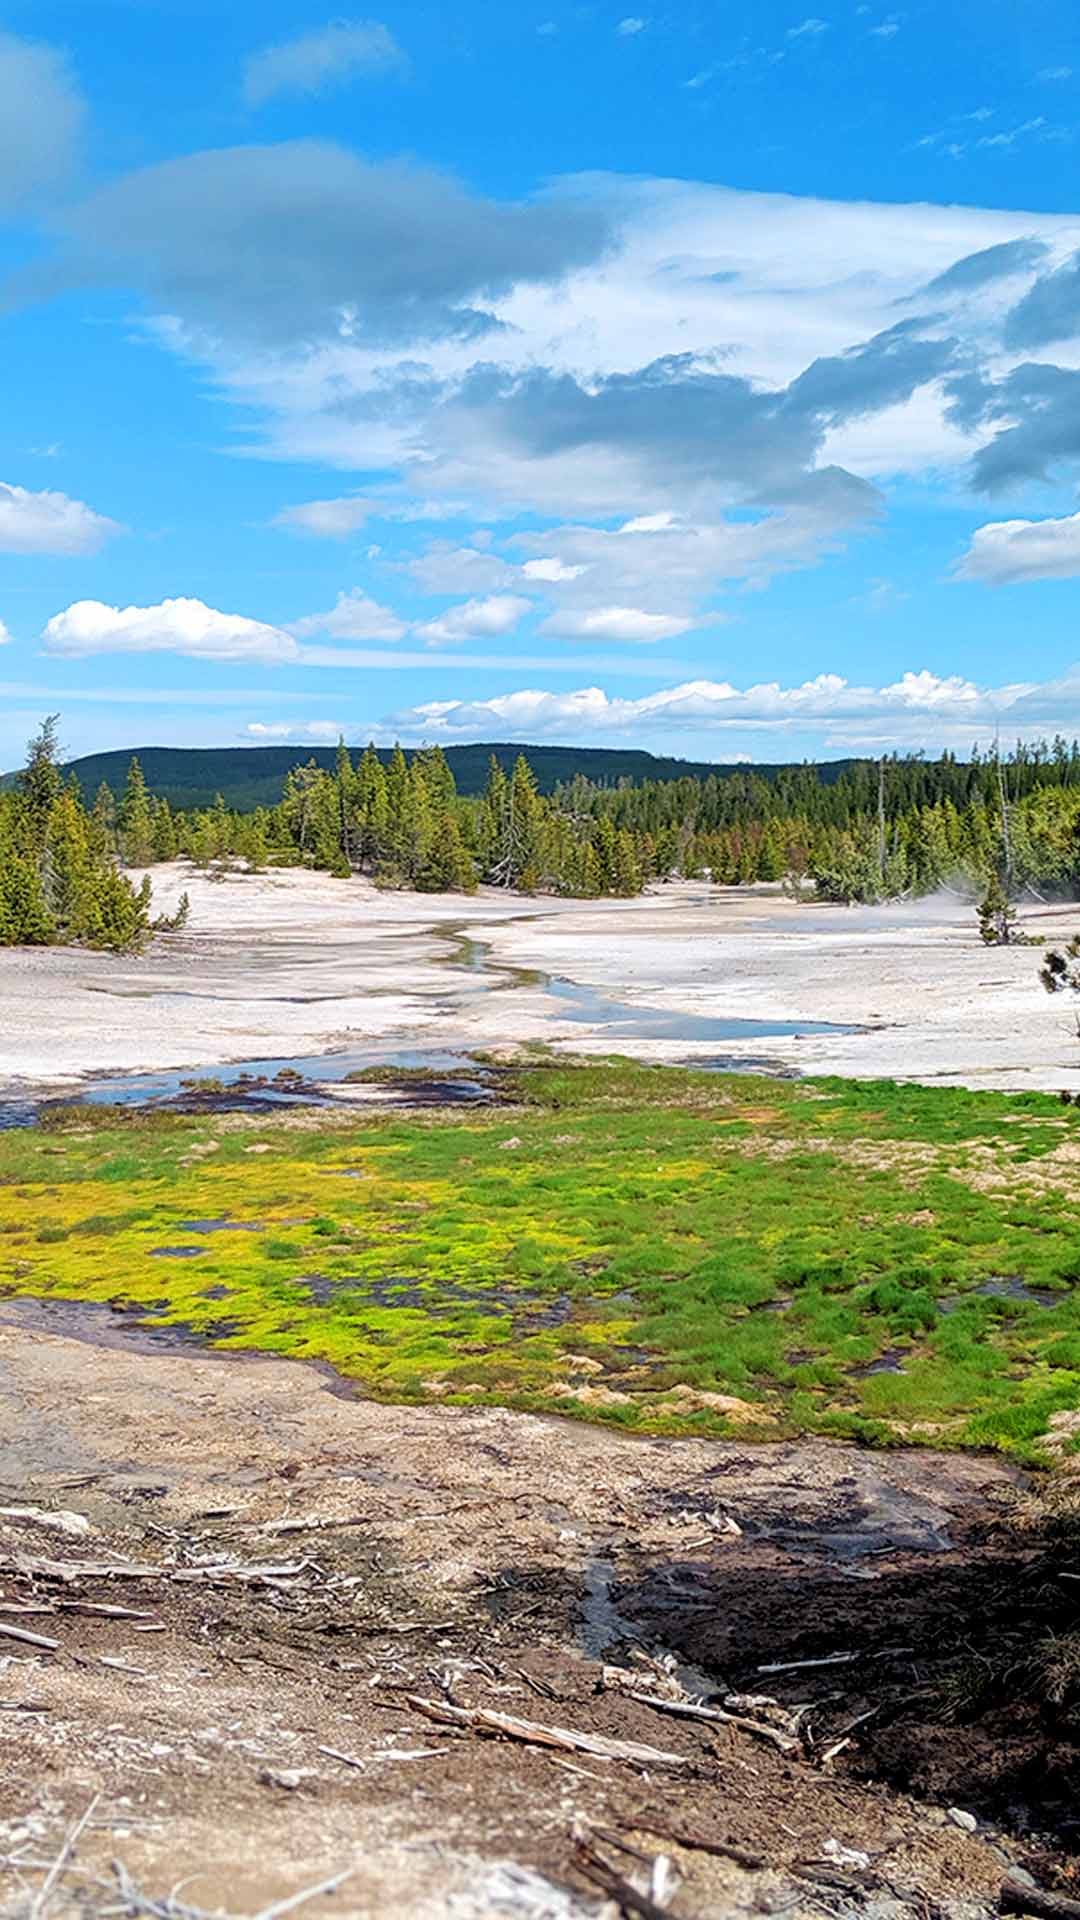 Yellowstone Norris geyser basin back basin landscape image